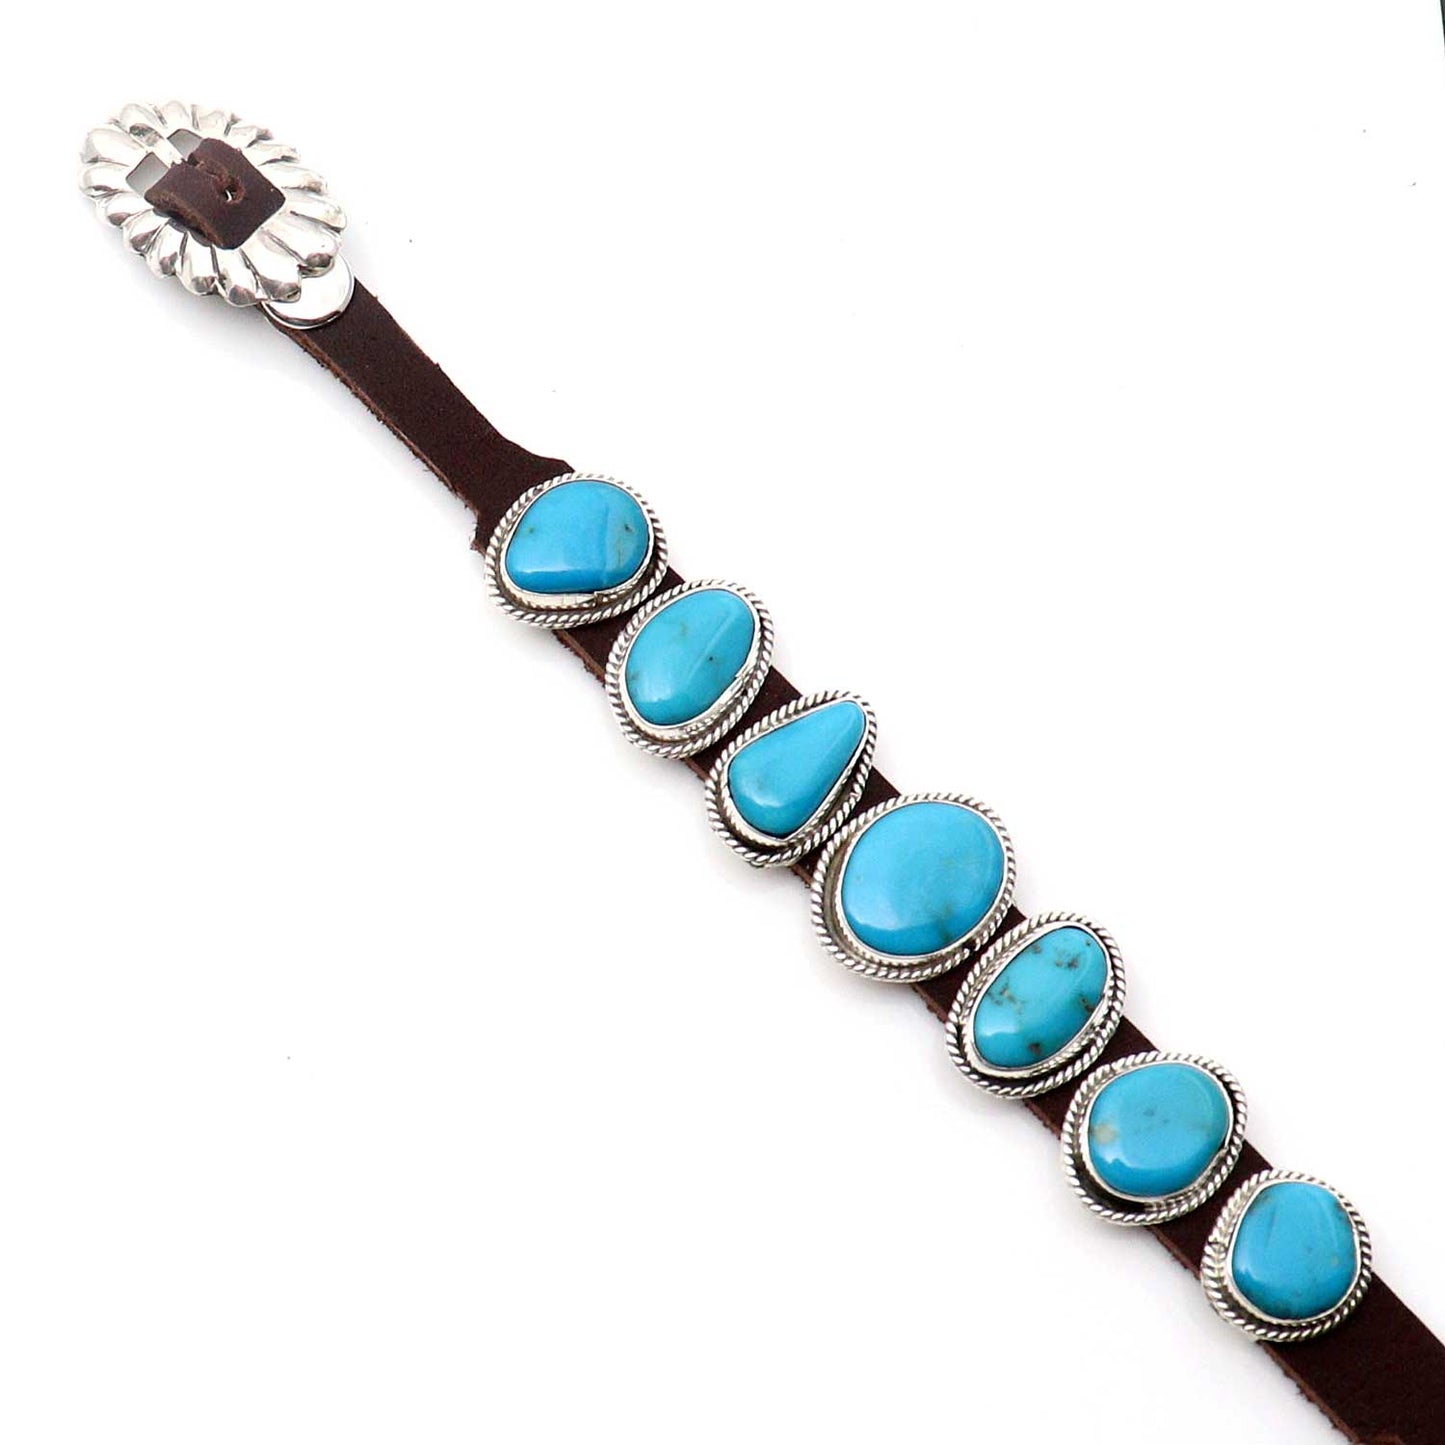 Turquoise & Leather Concho Bracelet by Martinez